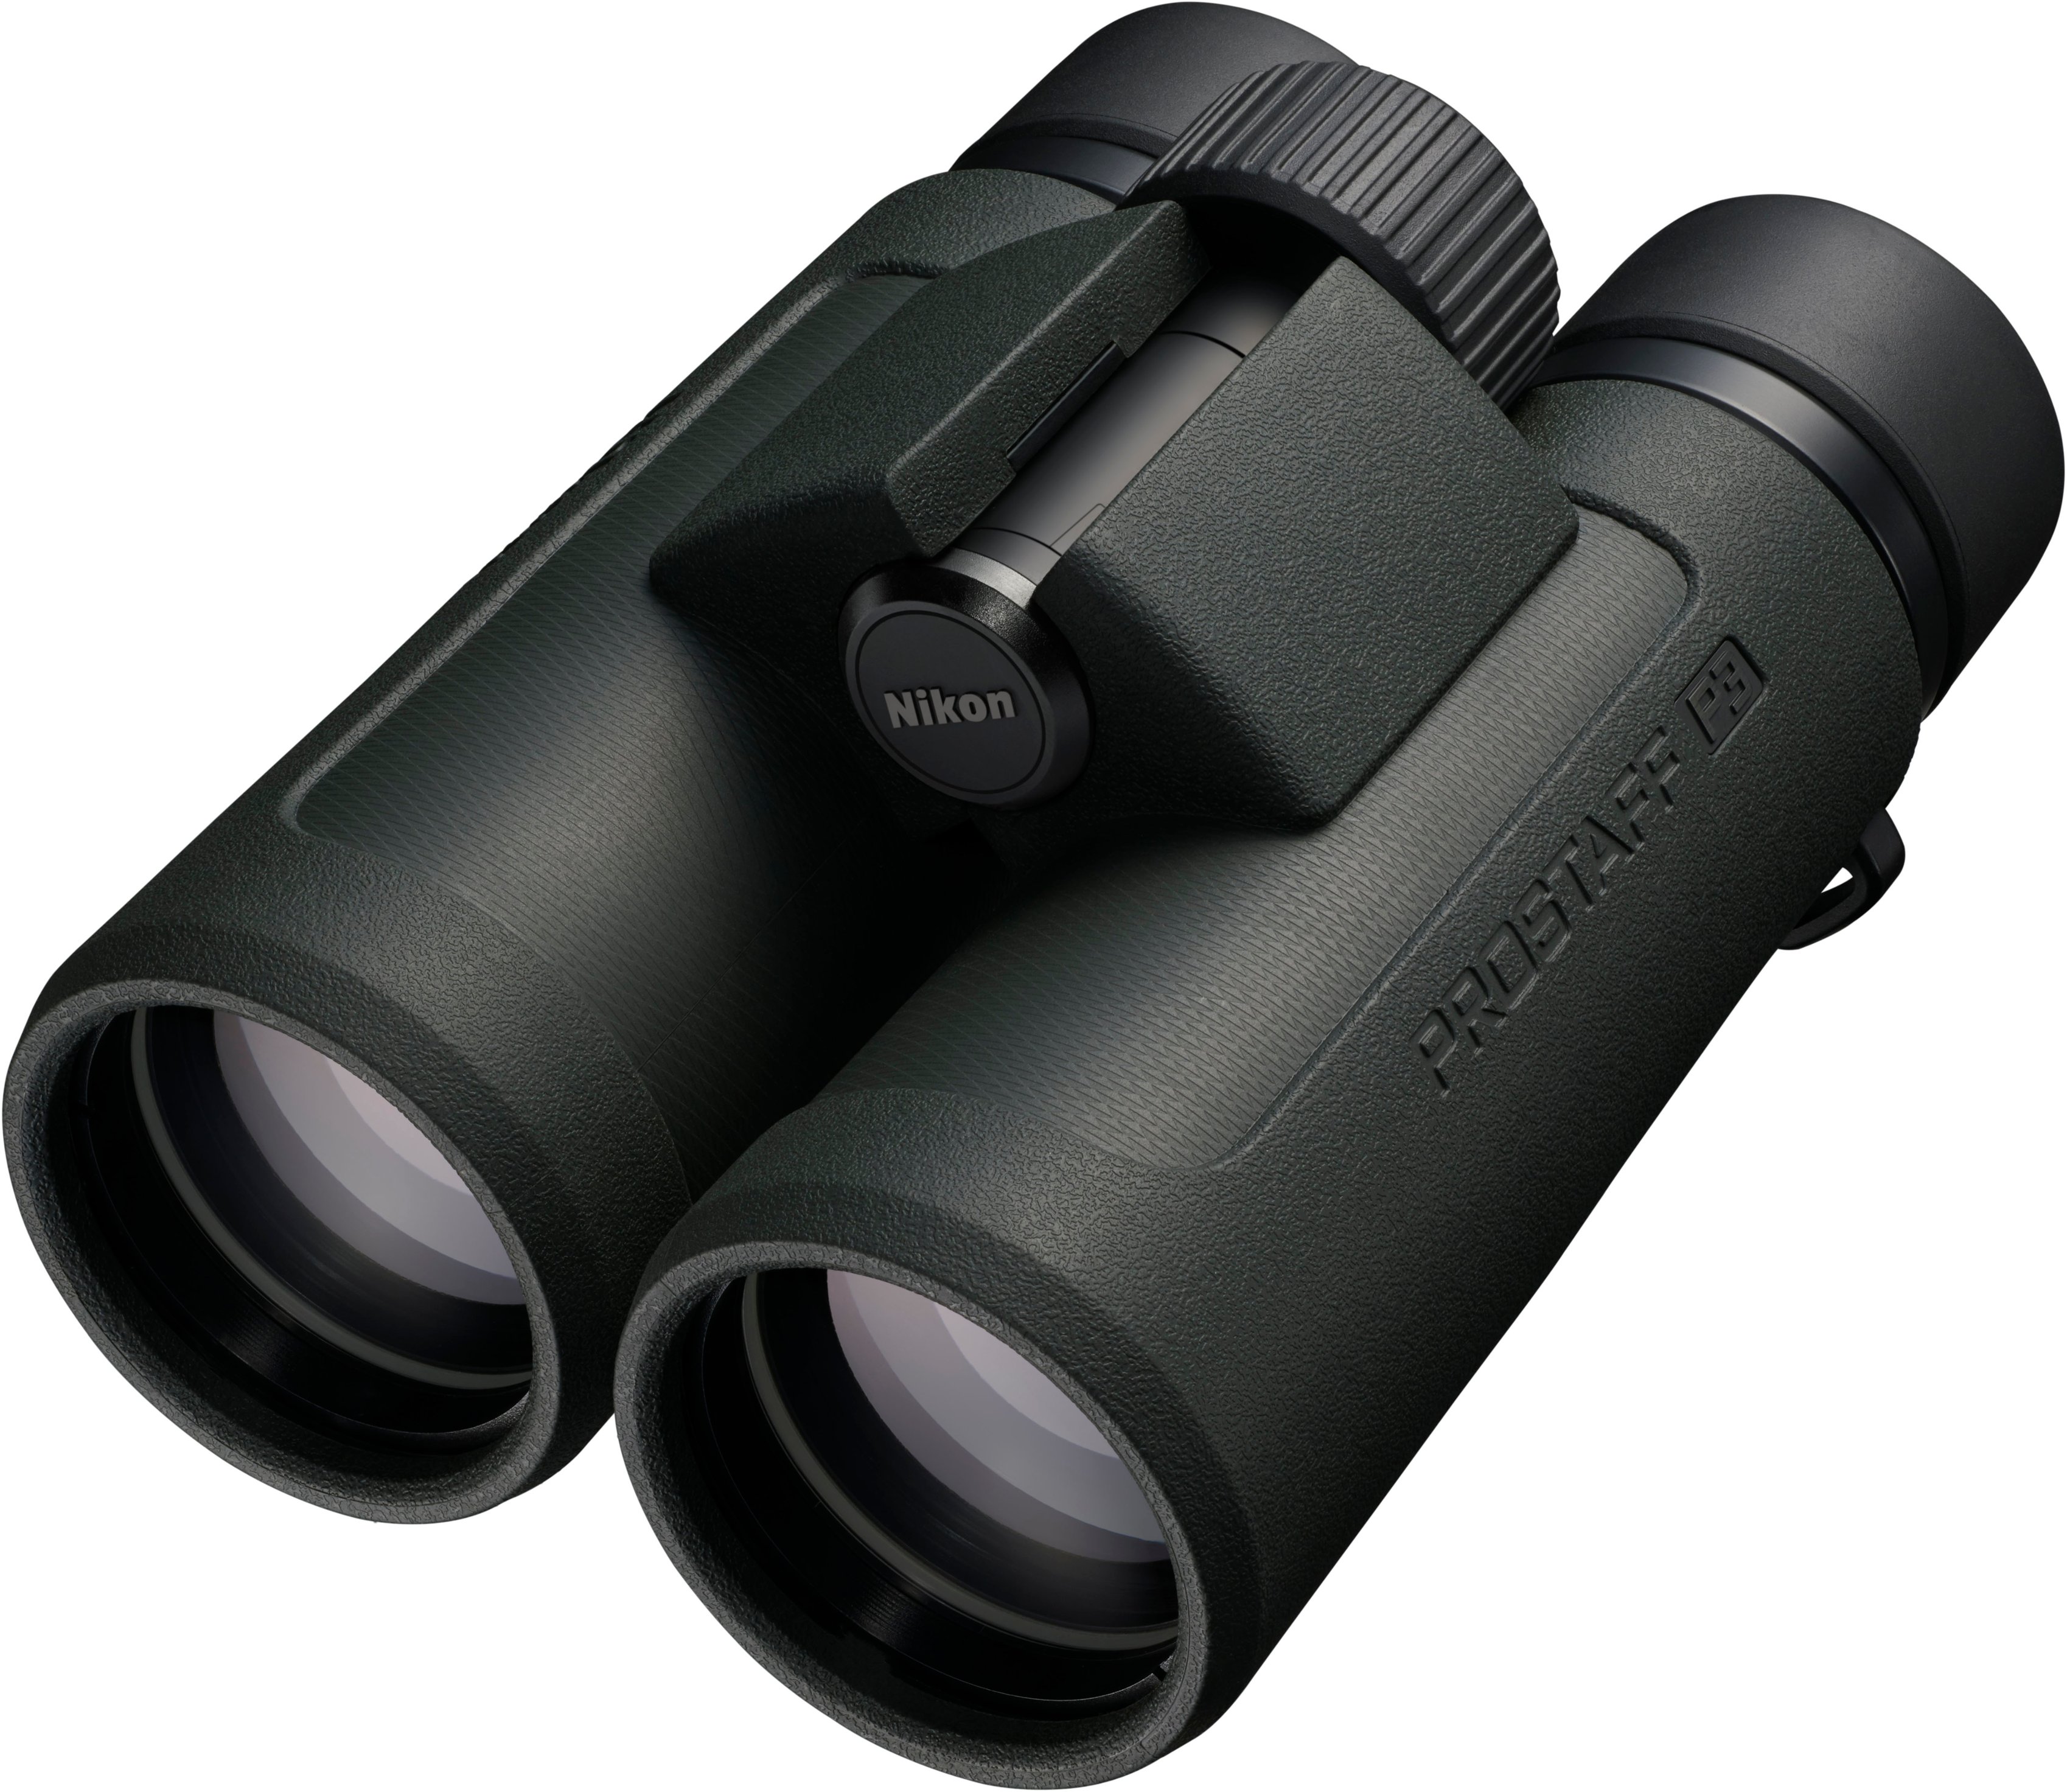 Nikon PROSTAFF 3S 8x42 Binoculars Black 16030 - Best Buy